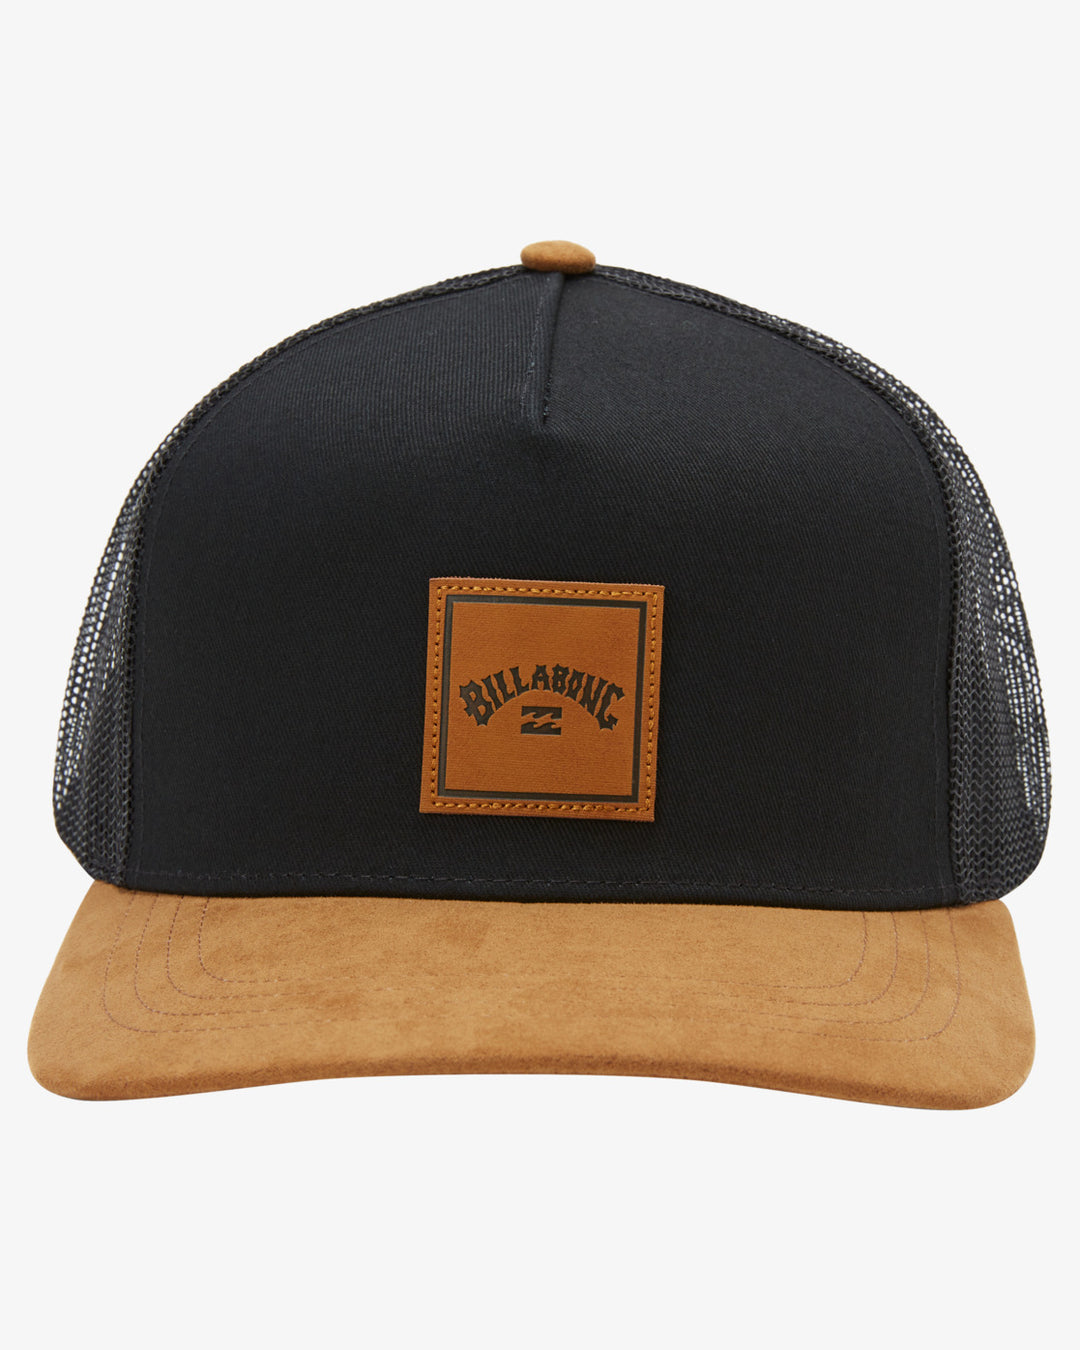 Billabong Stacked Trucker Hat - Black/Tan - Sun Diego Boardshop